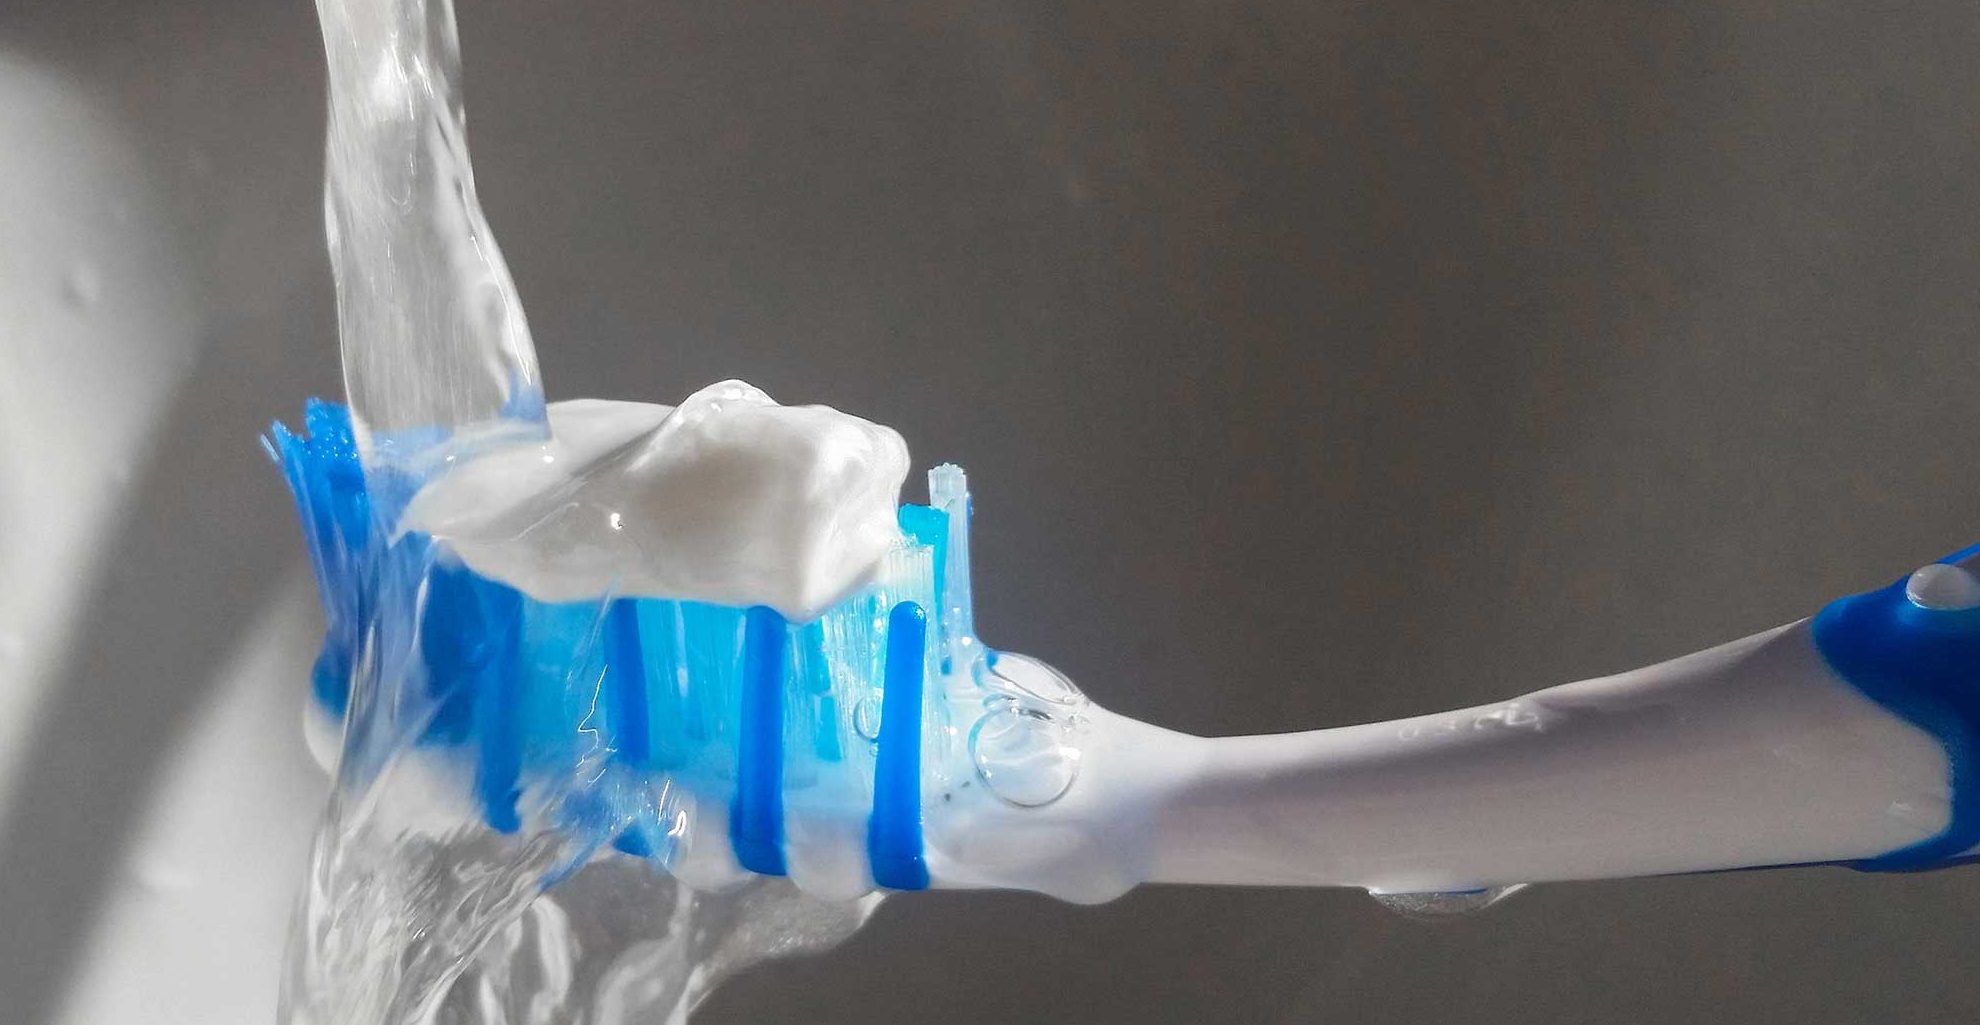 fluoride toothpaste on a brush